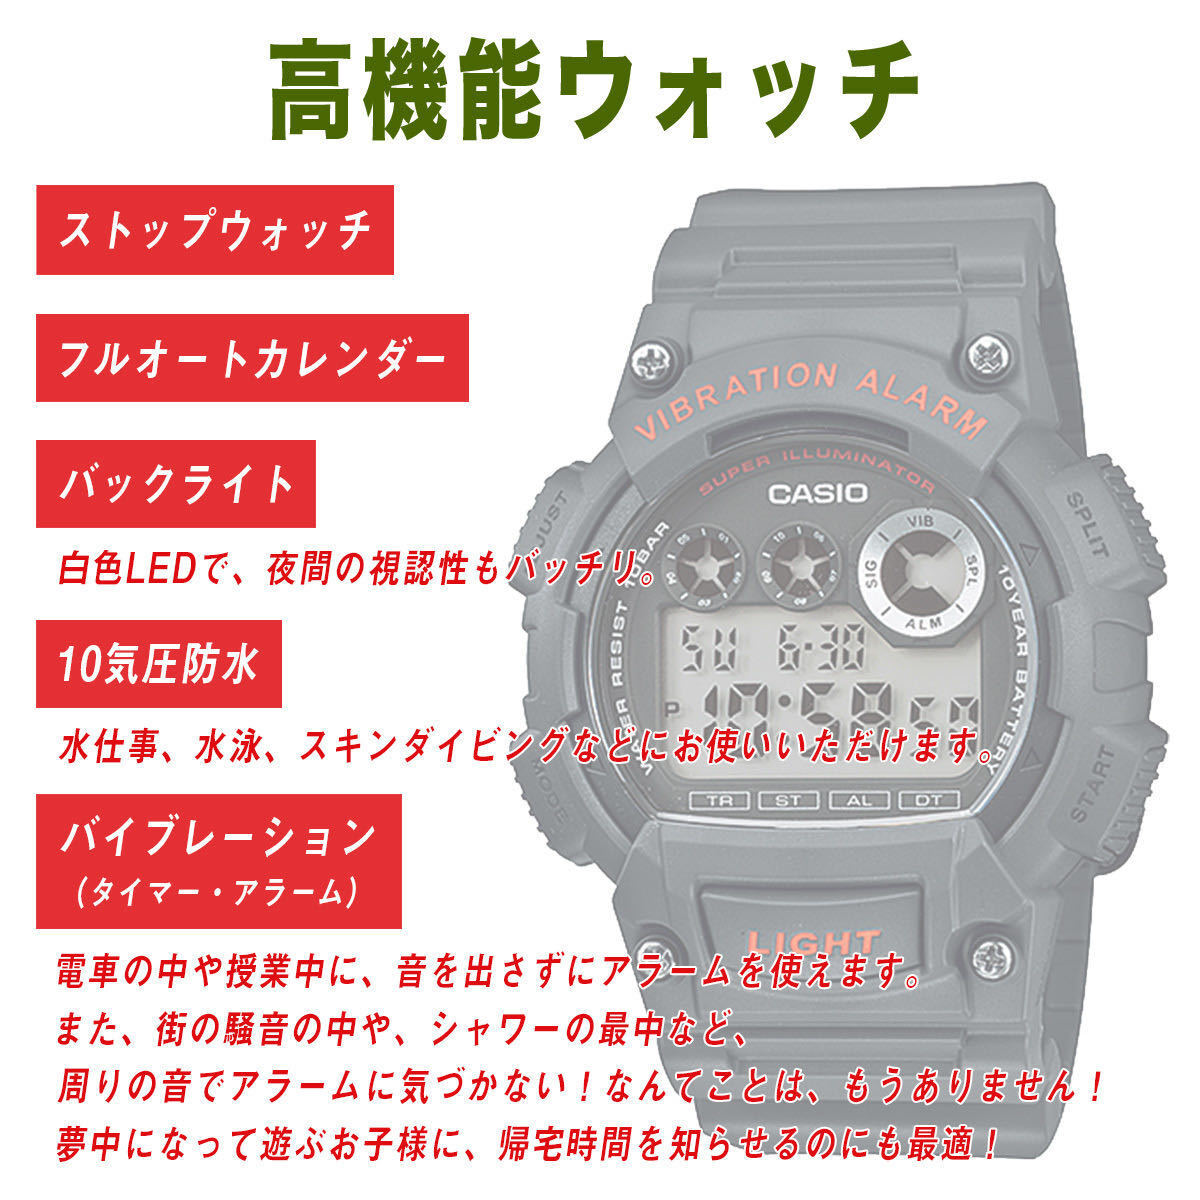 CASIO カシオ W735 ネイビー 紺 腕時計 バイブレーション アラーム 三つ目 デジタル 男の子 メンズ 男性 キッズ 振動 バイブ 防水 軽量_画像4